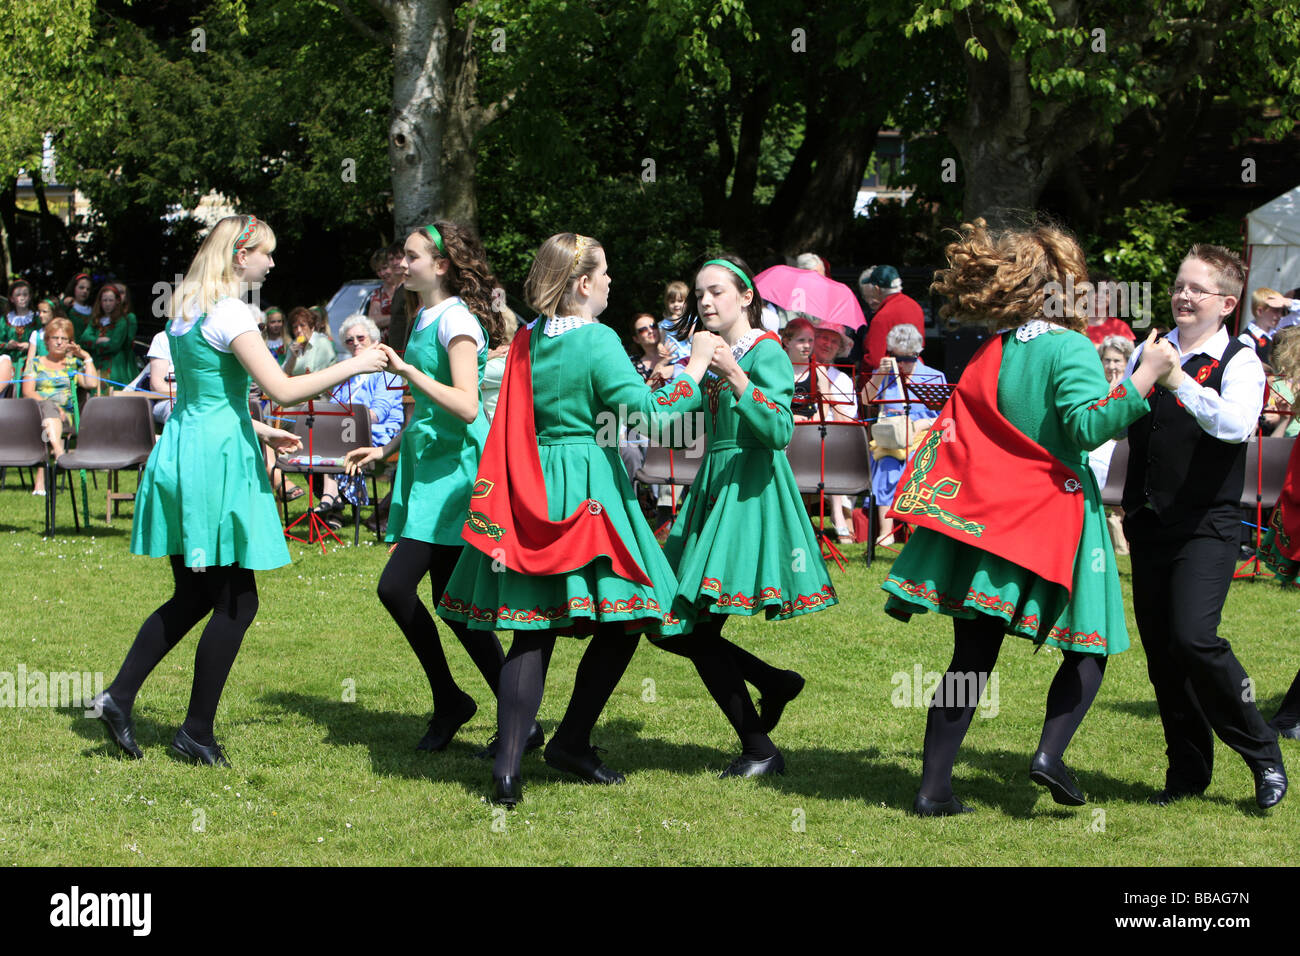 Young irish teenage girls dancing a traditional jig at a summer